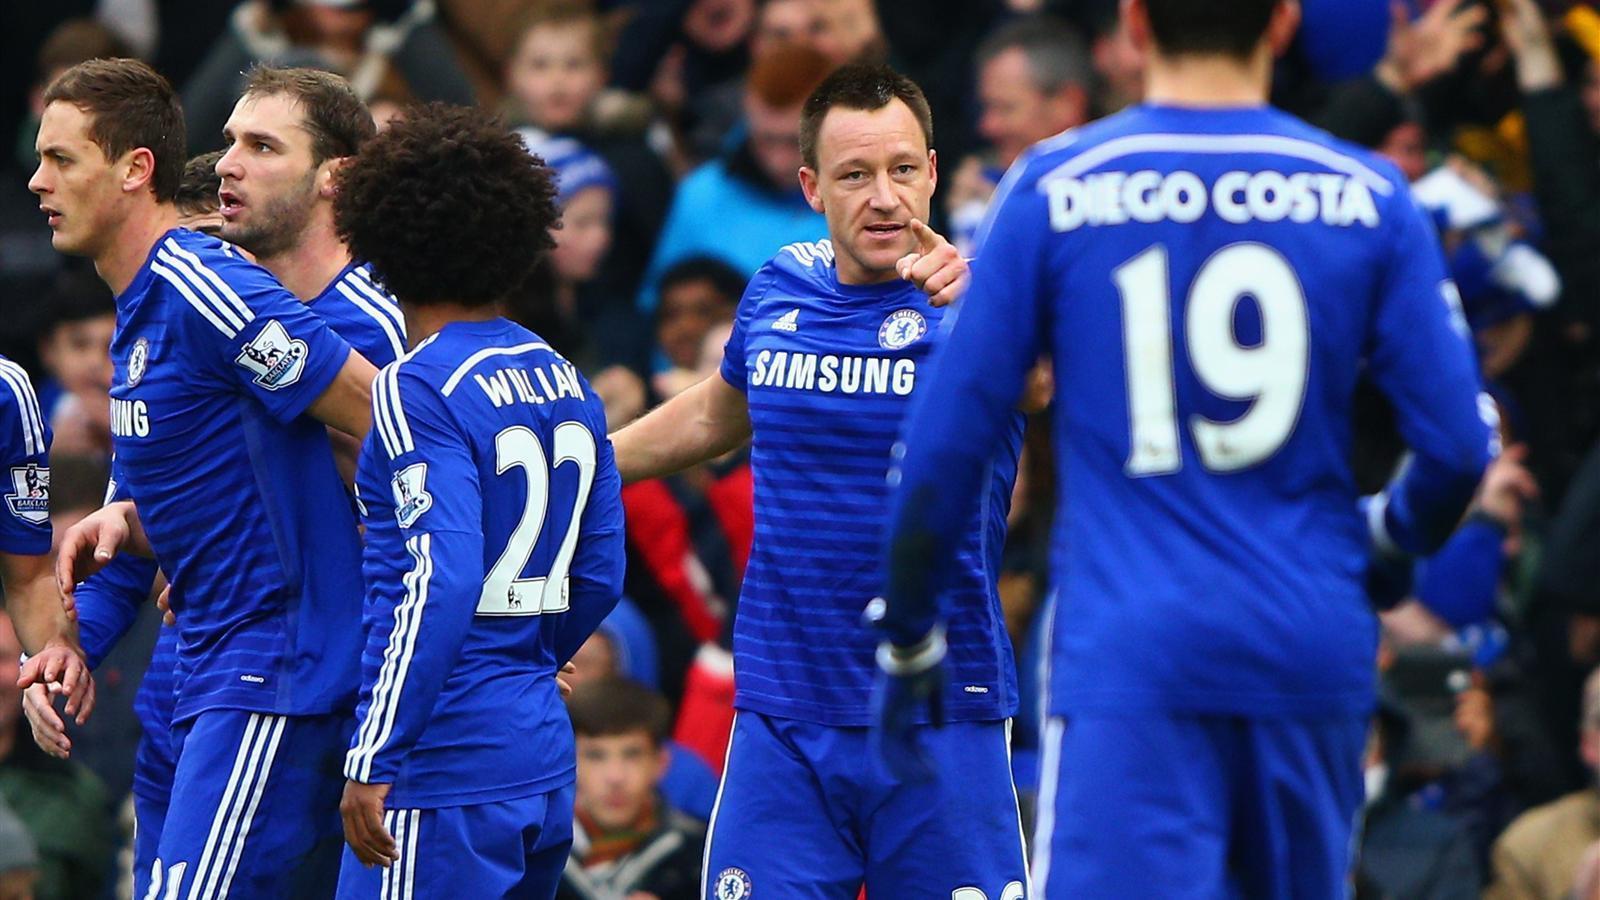 Chelsea enjoy dominant win over West Ham League 2014